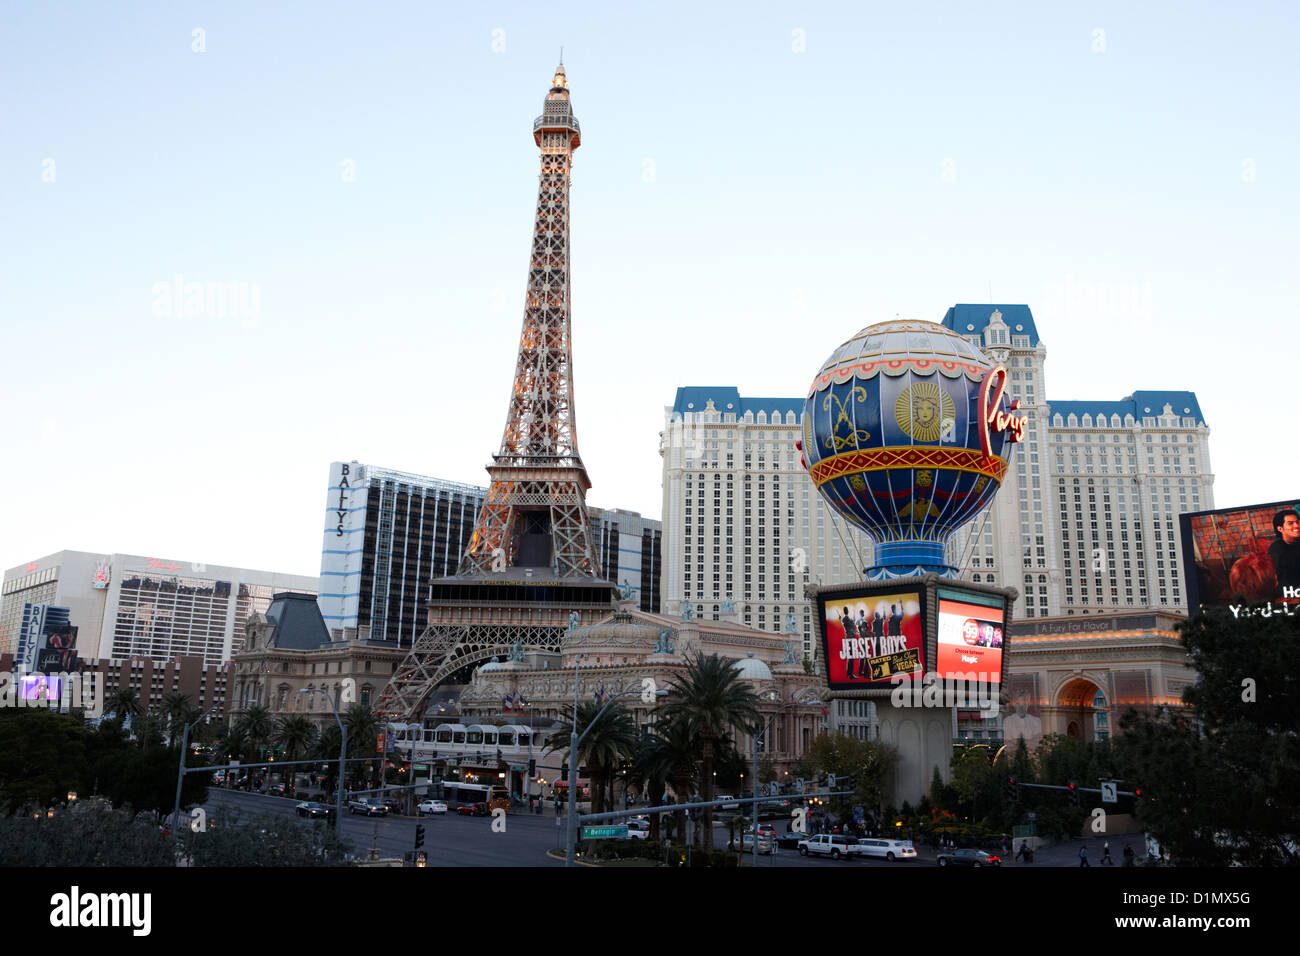 Hôtel Paris Las Vegas à Las Vegas - États-Unis